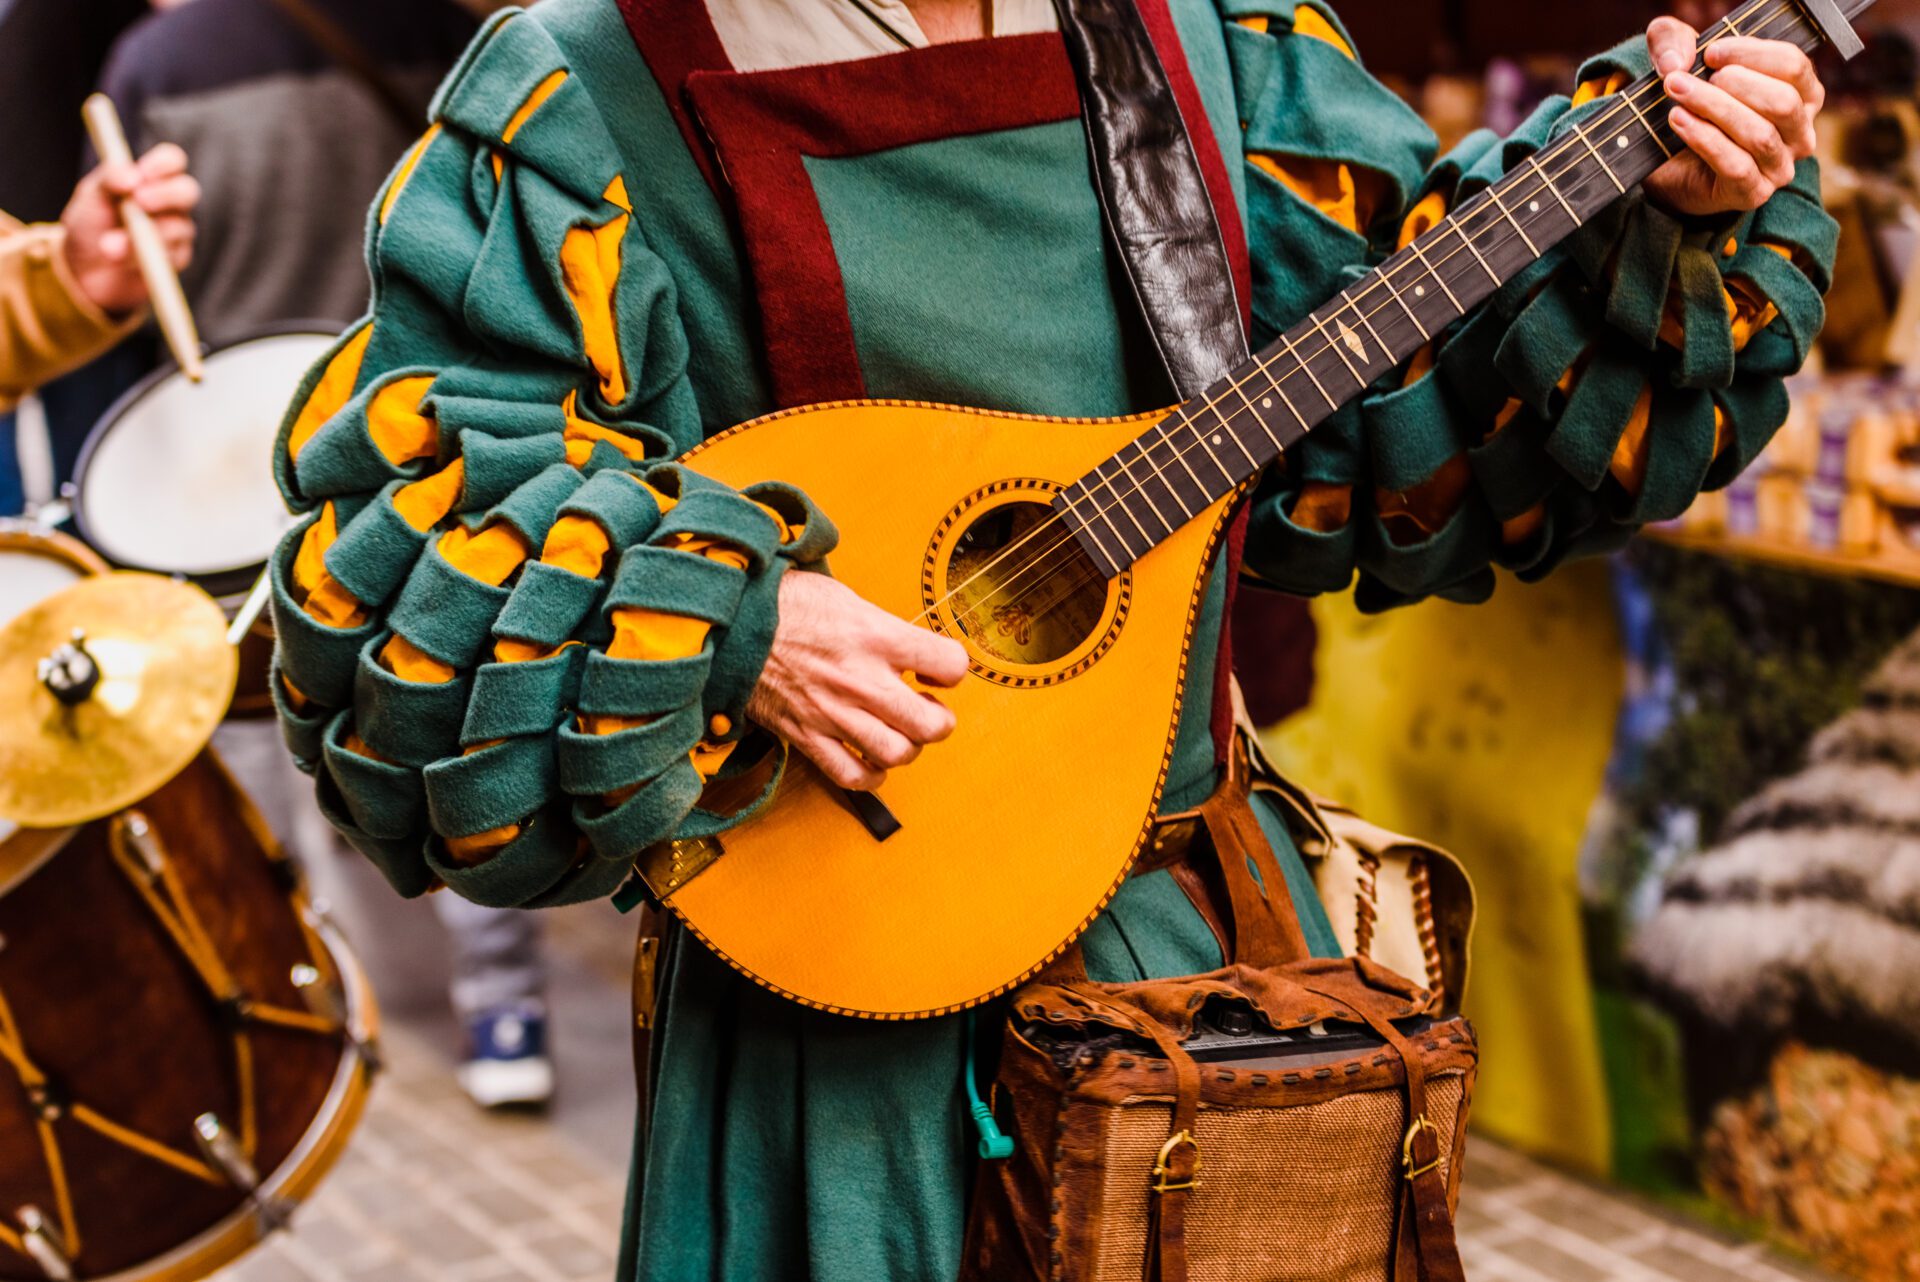 Tennessee Renaissance Festival, medieval troubadour playing an antique guitar.